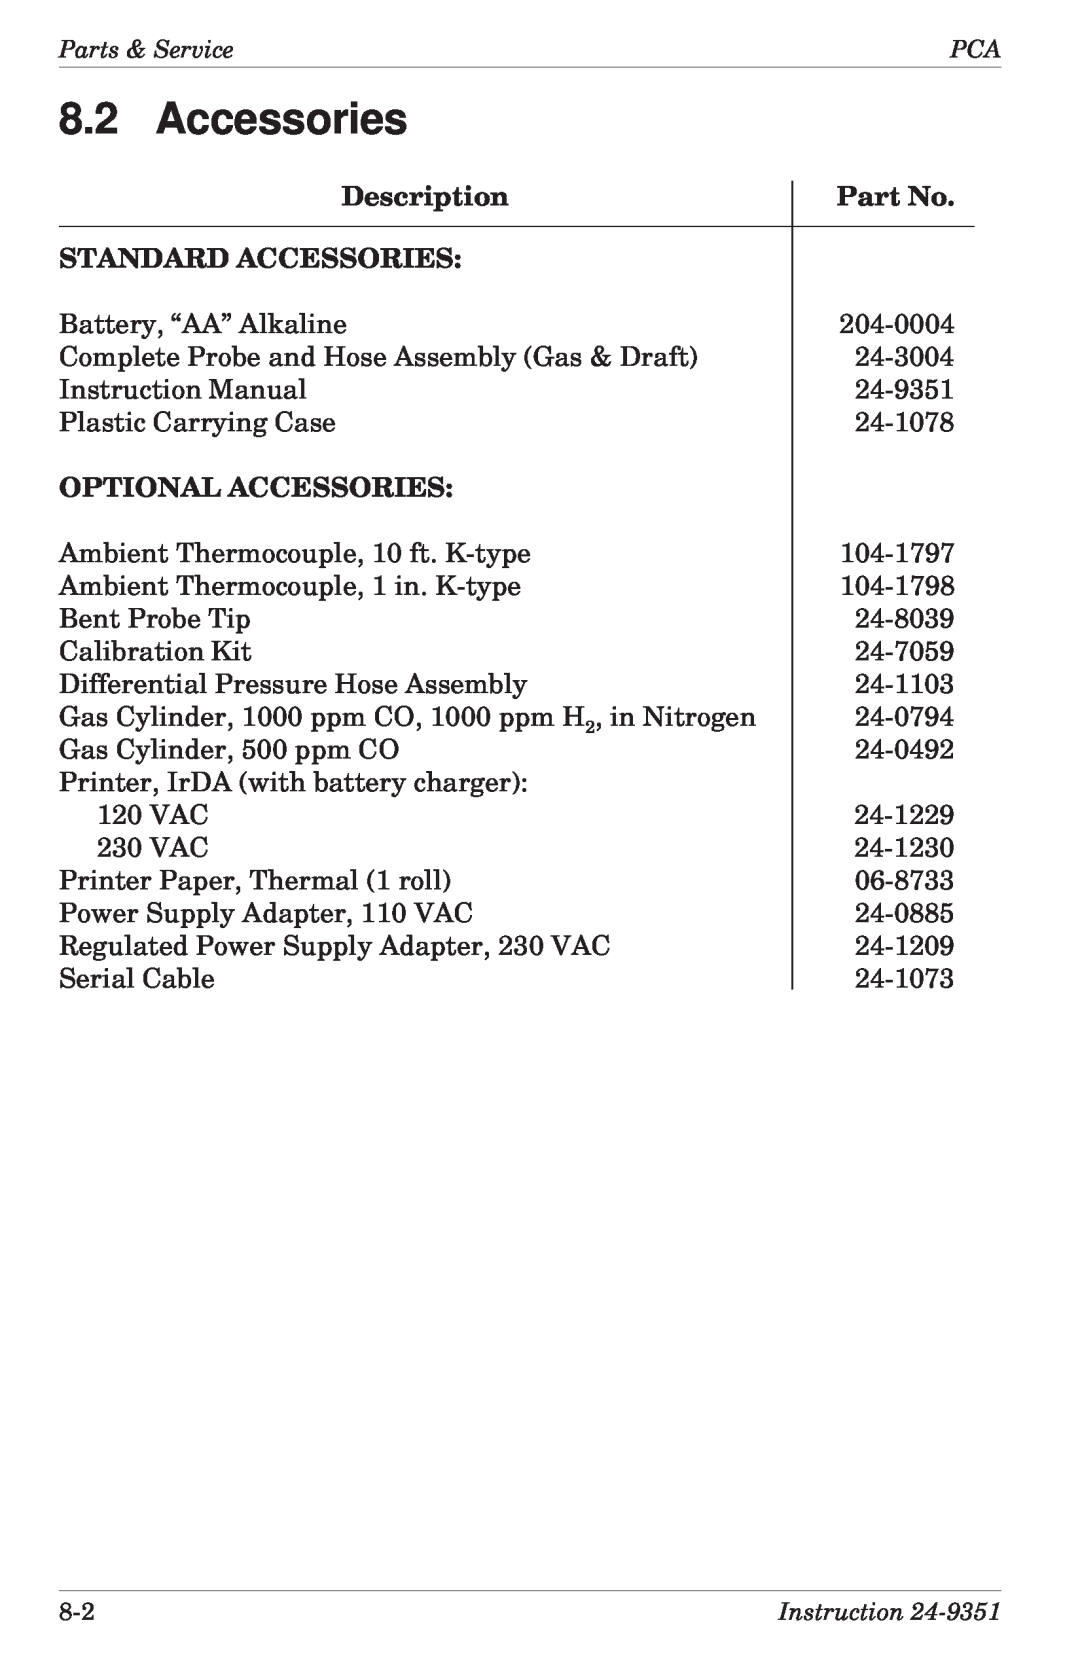 Bacharach 24-9351 manual Description, Part No, Standard Accessories, Optional Accessories 